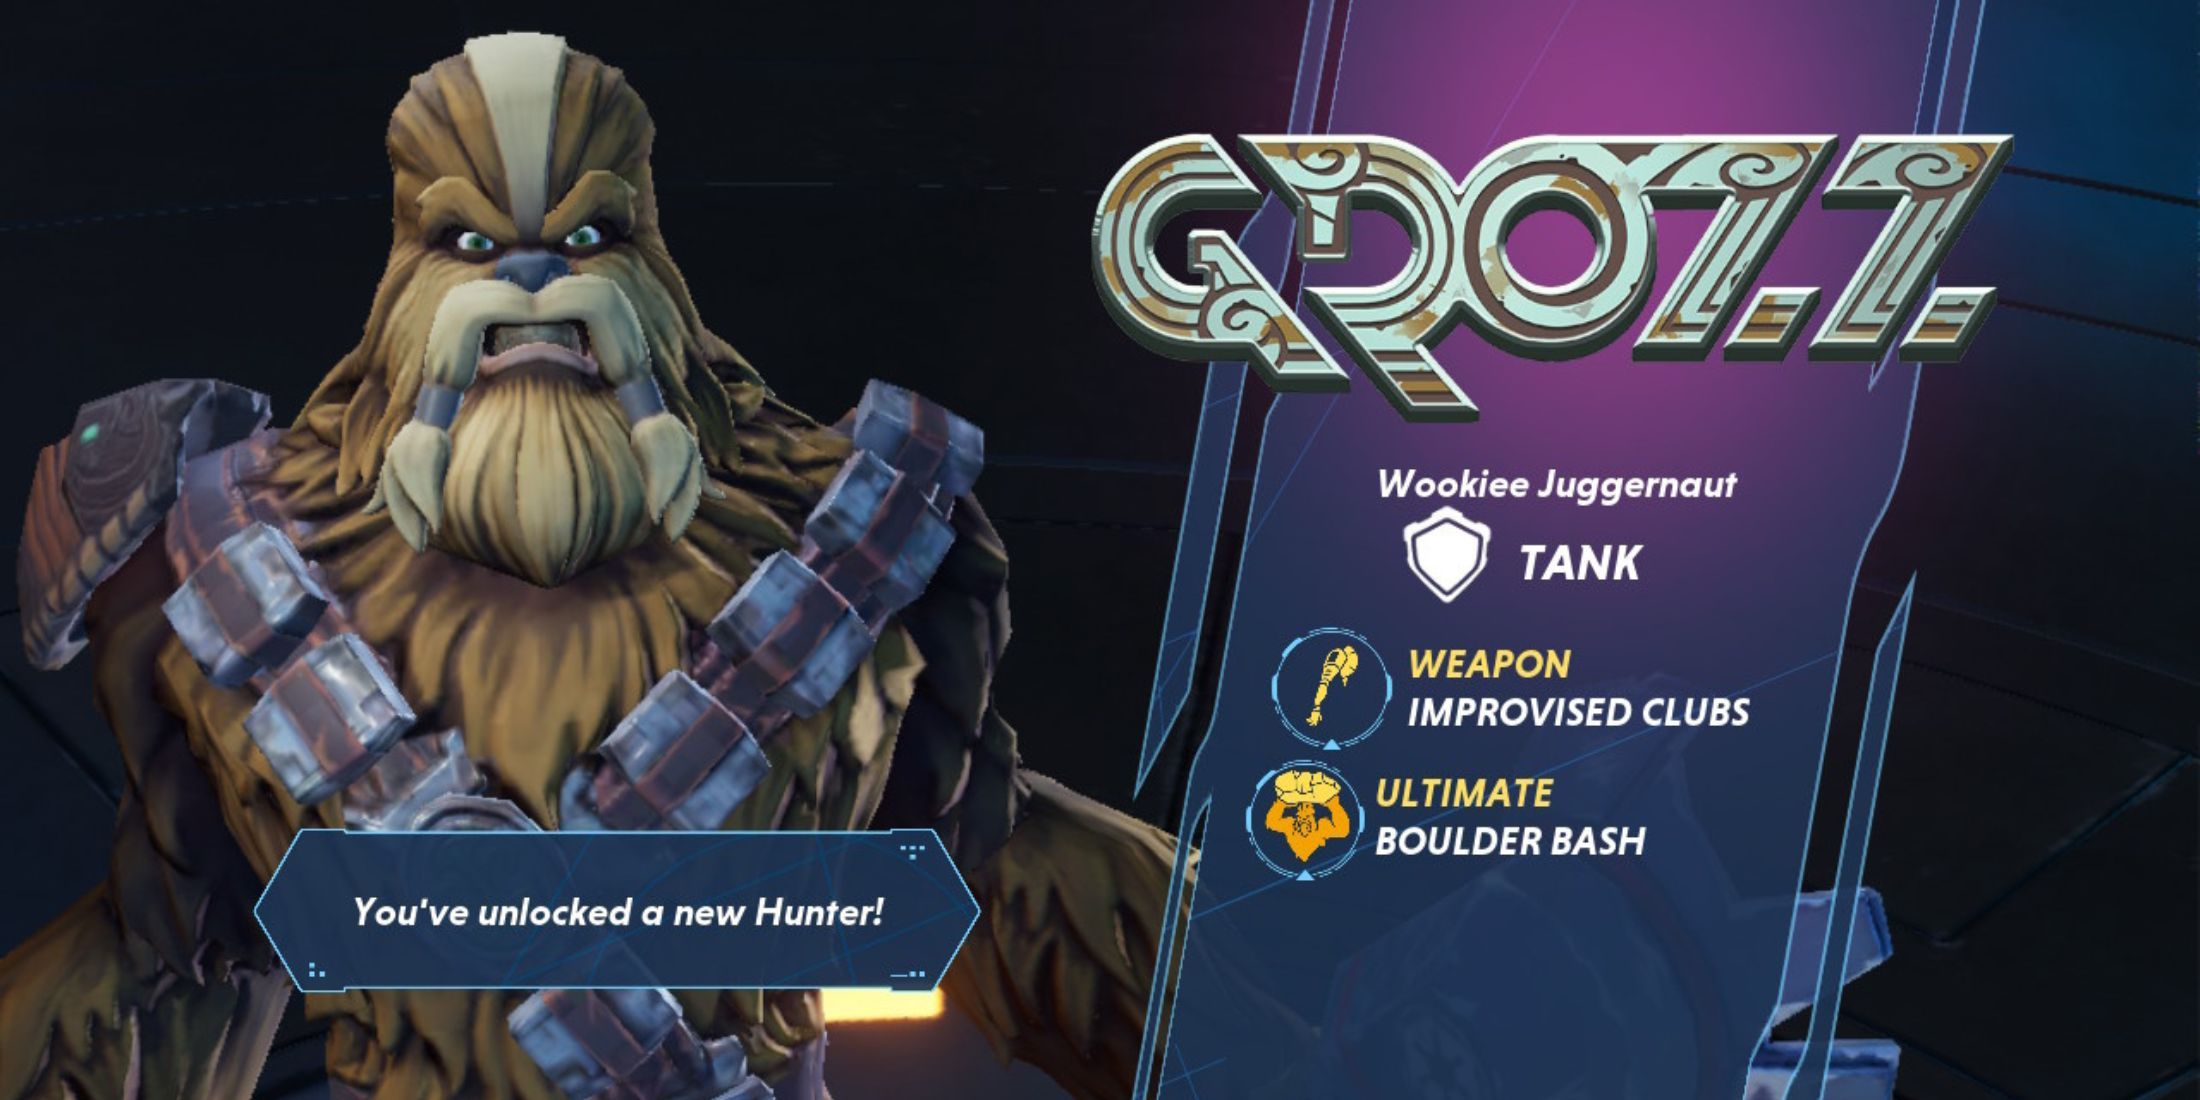 Grozz being unlocked in Star Wars: Hunters